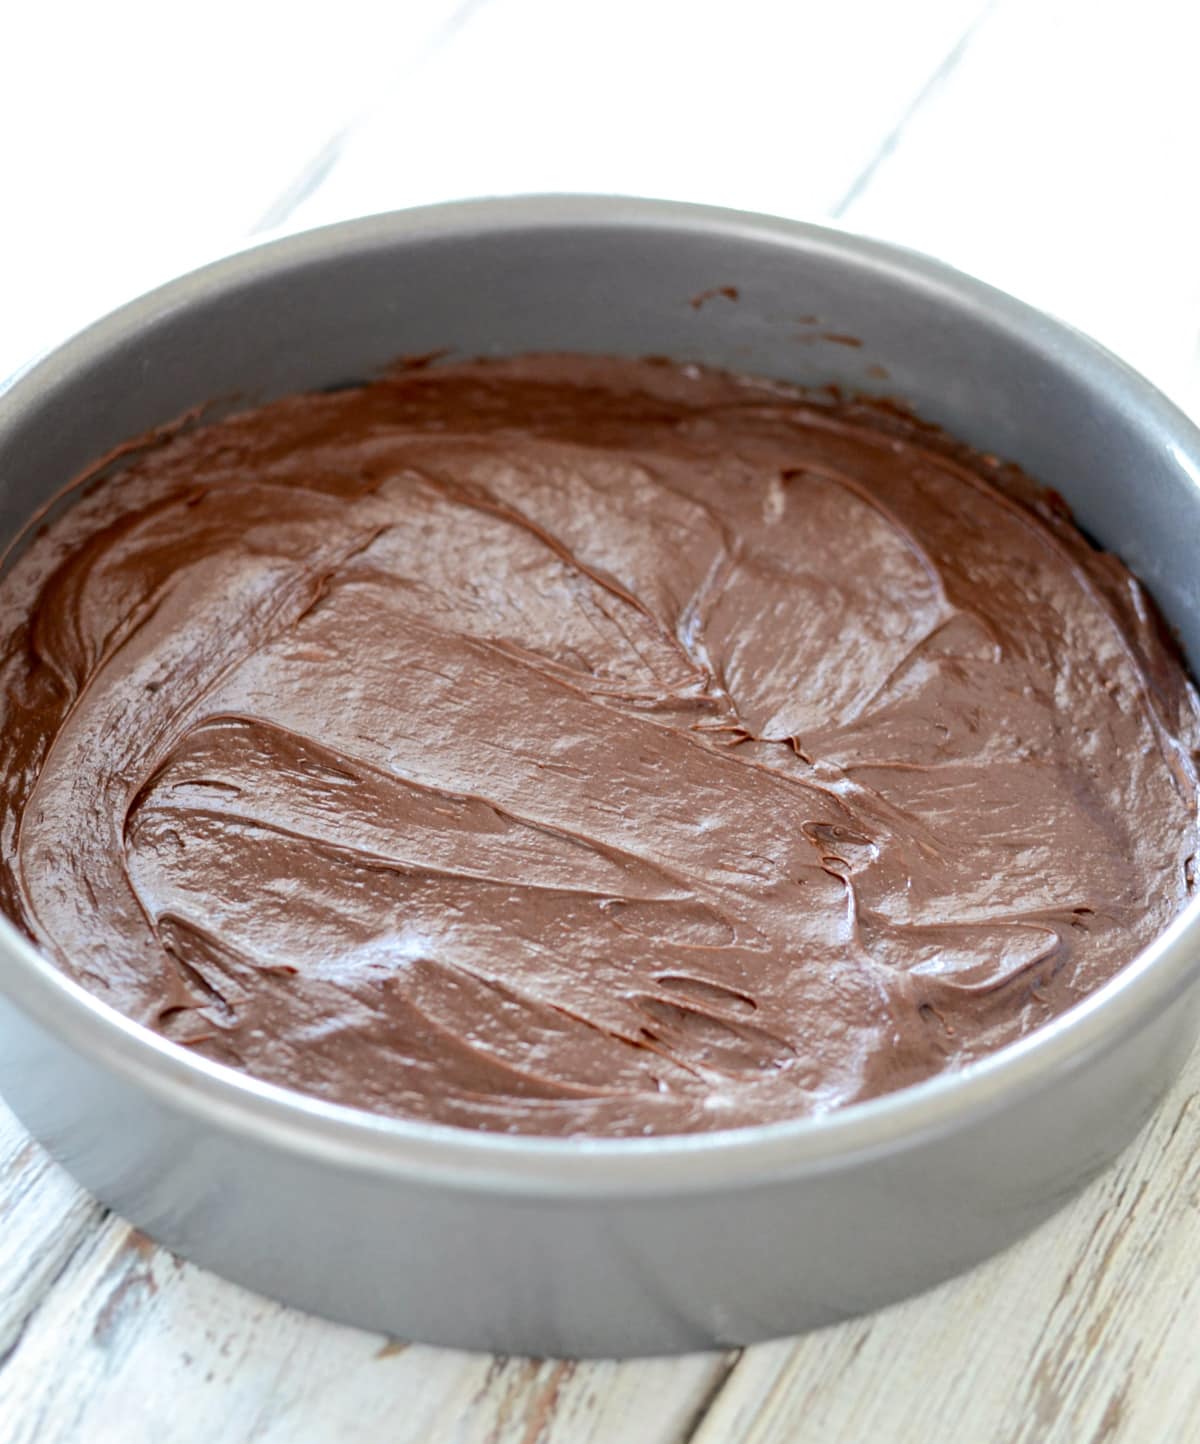 Flourless chocolate cake batter in circle pan.